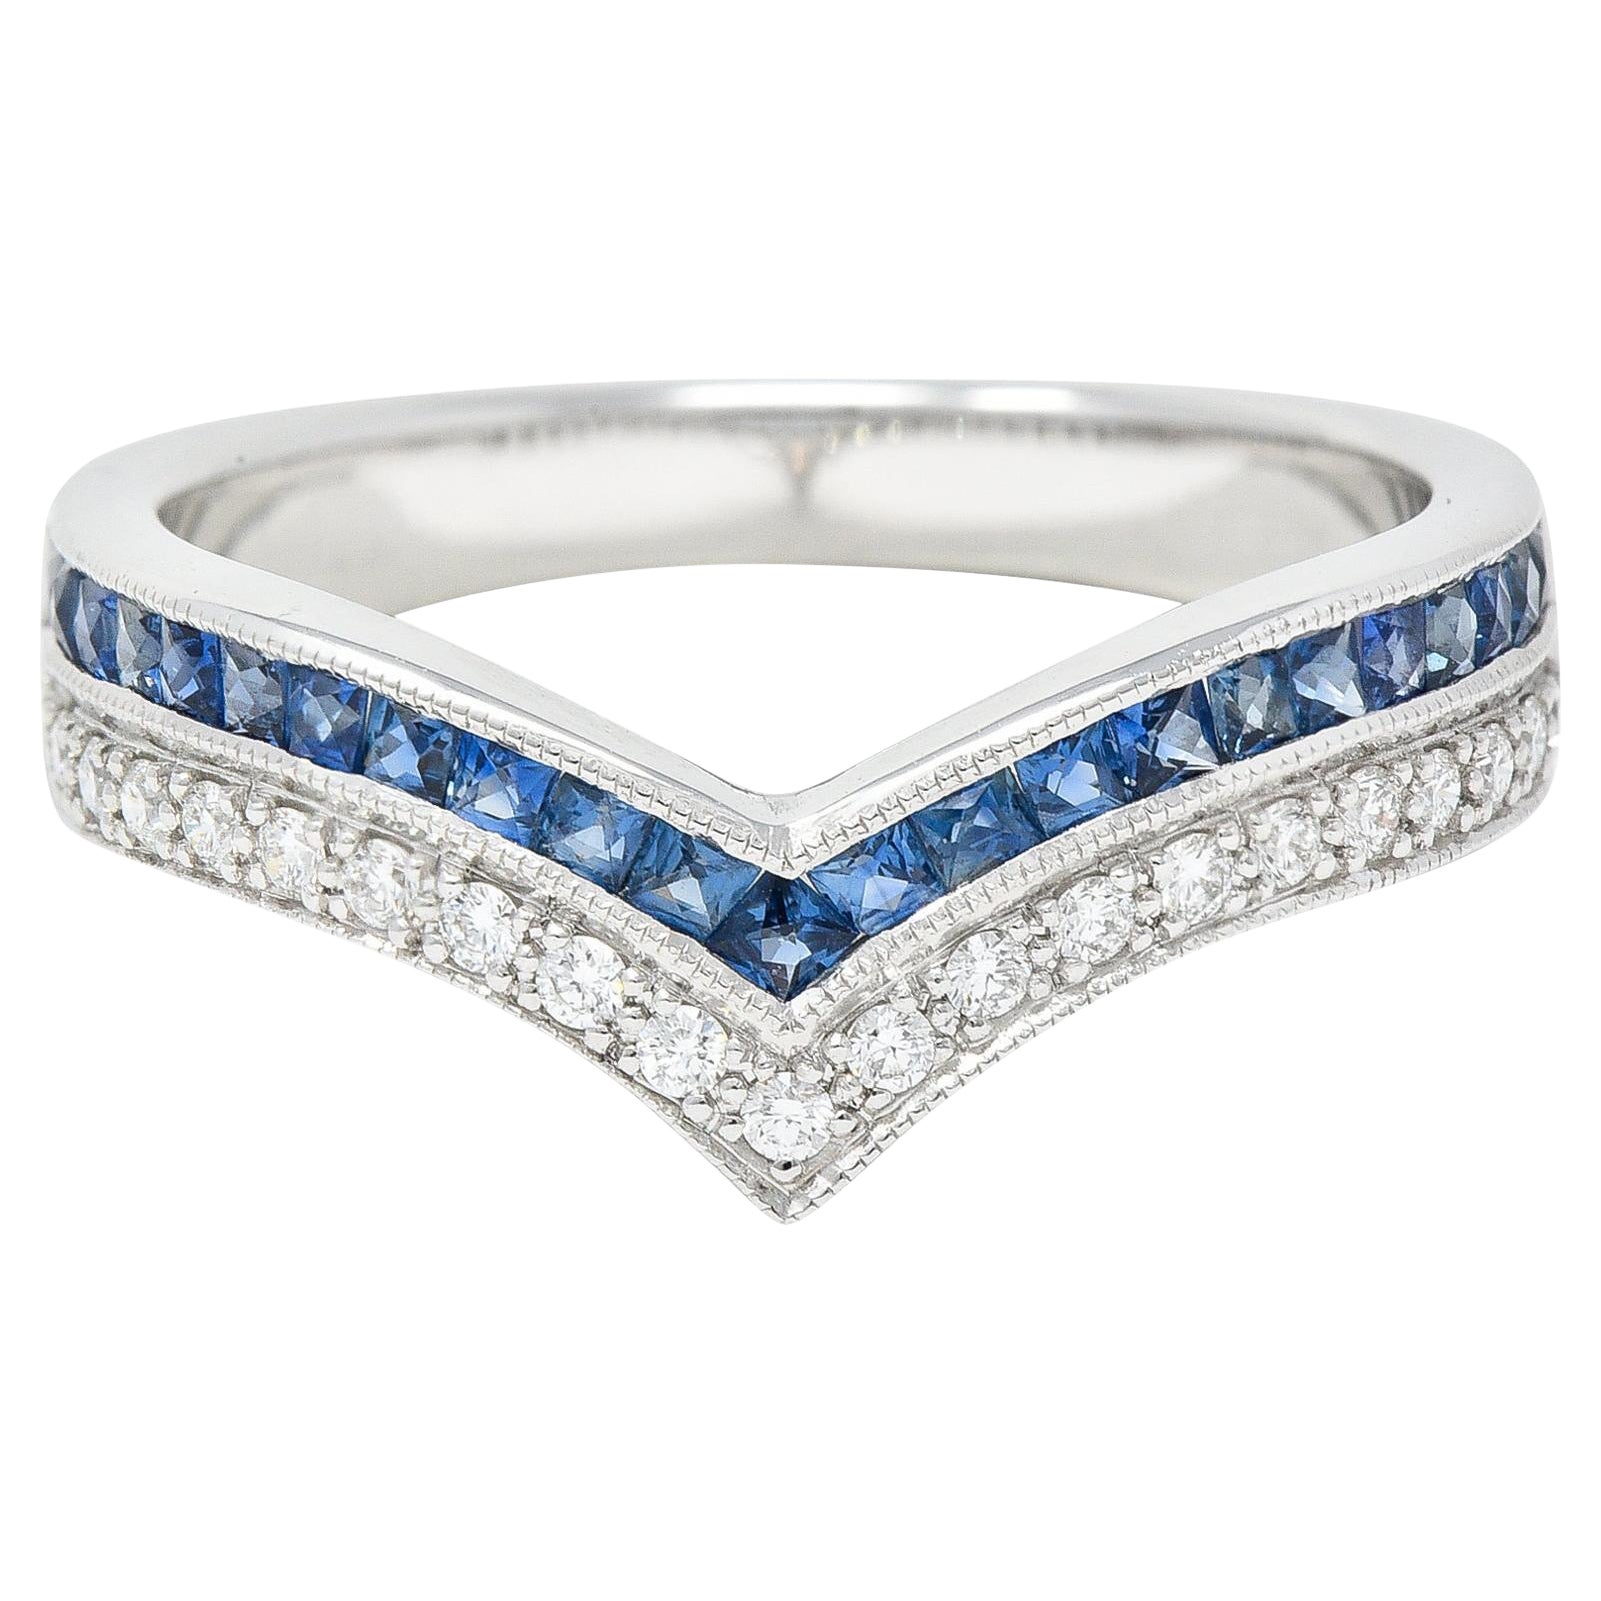 French Cut Sapphire Diamond 14 Karat White Gold Chevron Contour Band Ring